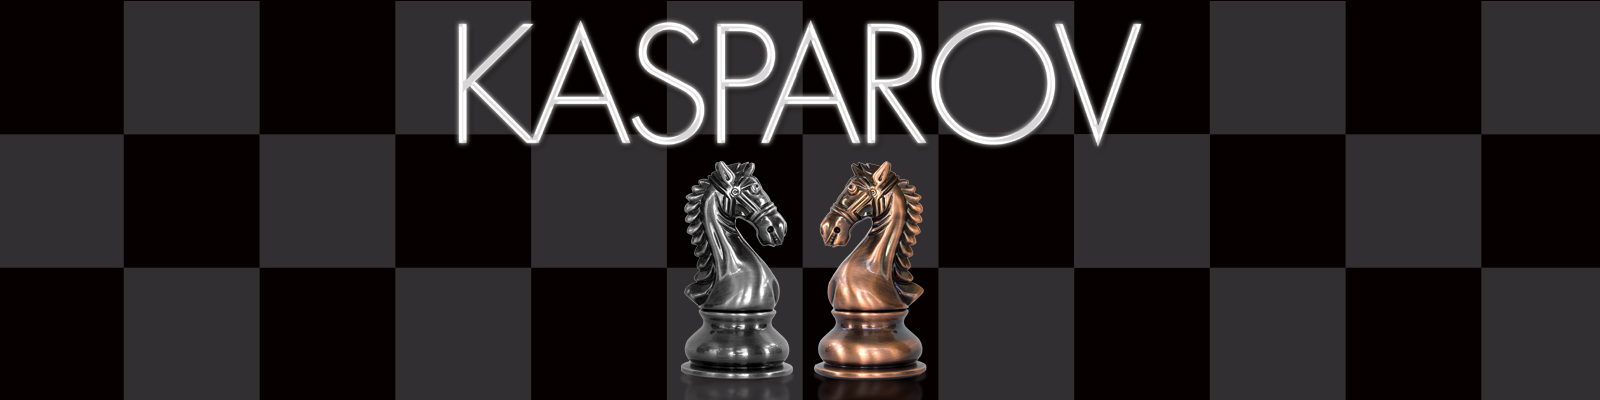 The Kasparov Grandmaster Chess Set - Hammacher Schlemmer